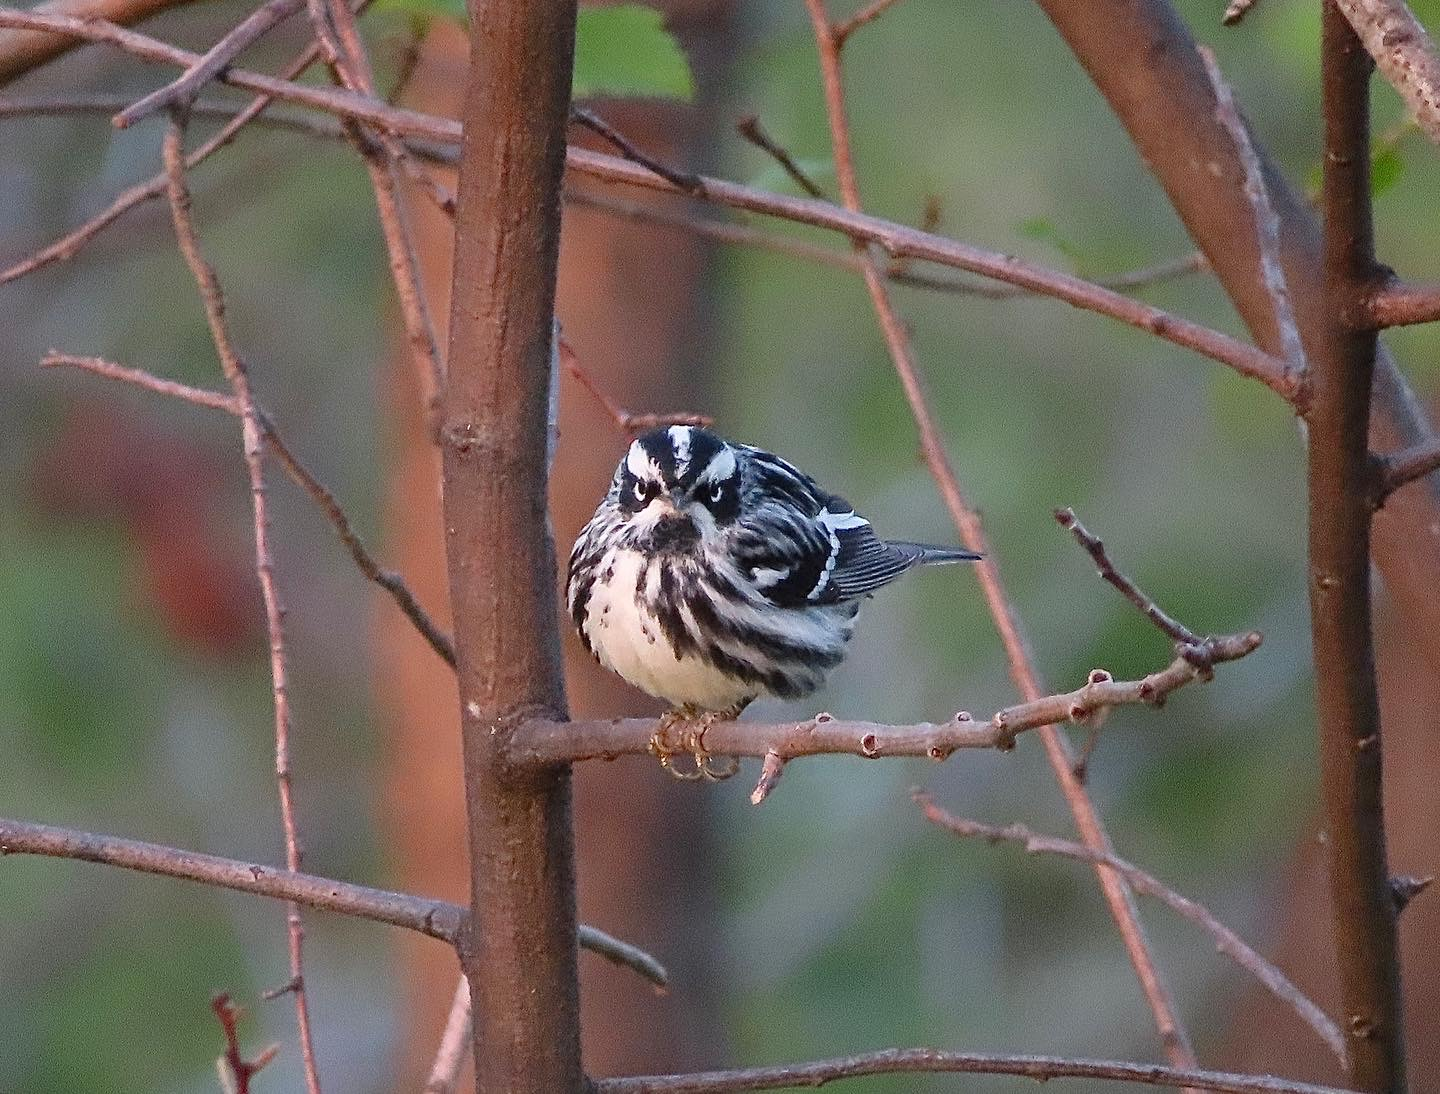 Spring bird watch; Diversifying the environmental field